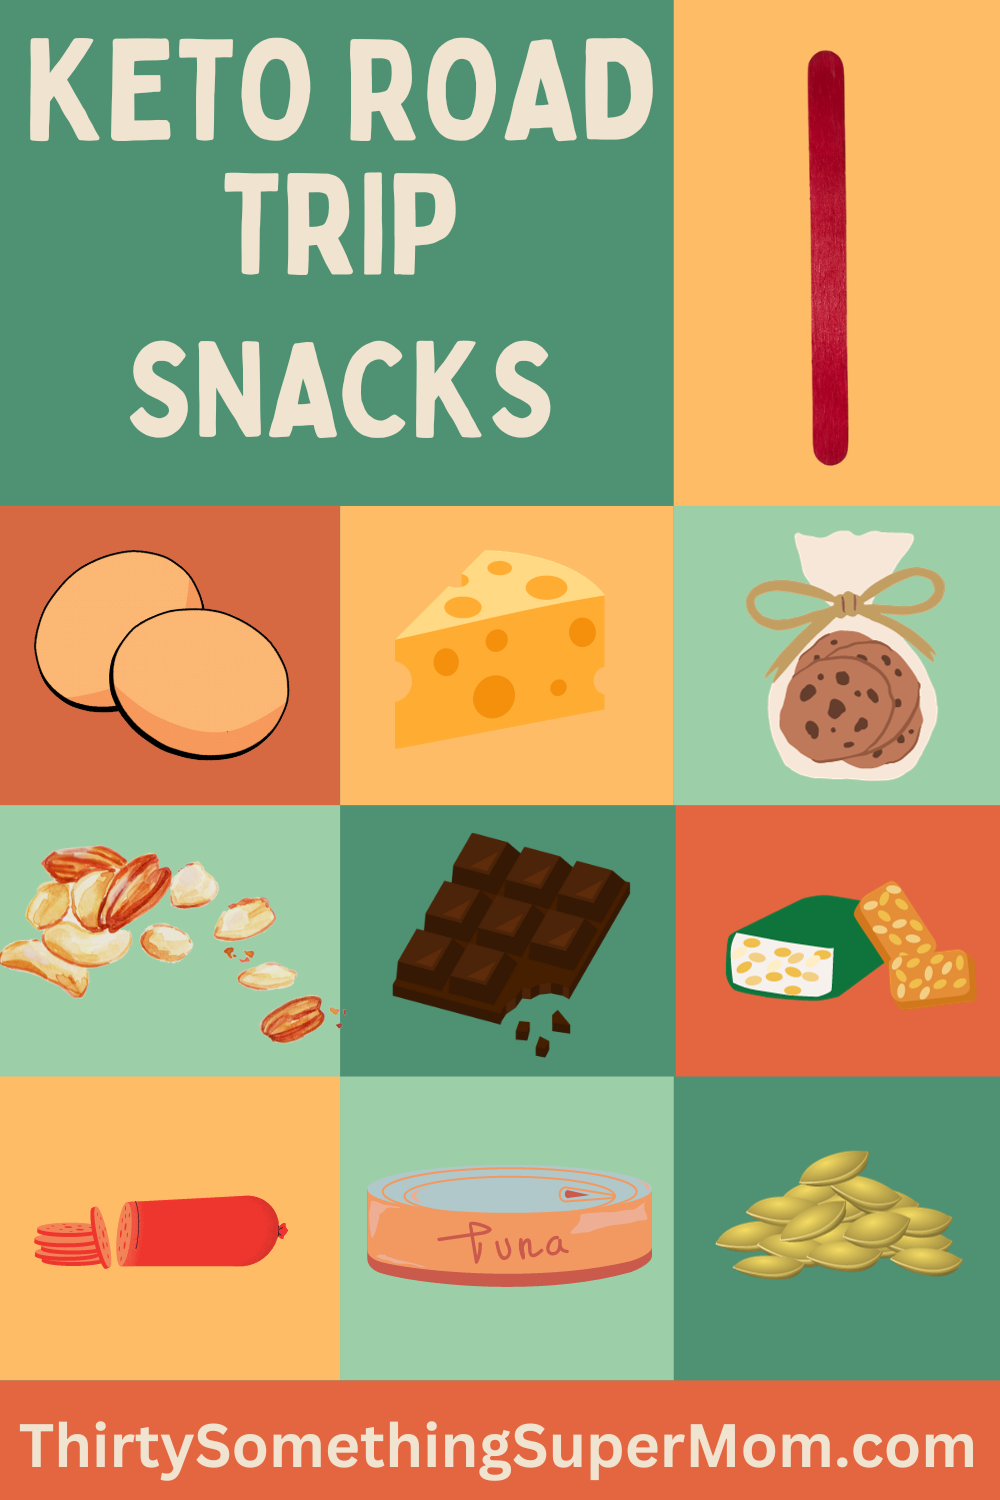 Keto road trip snacks infographic. 